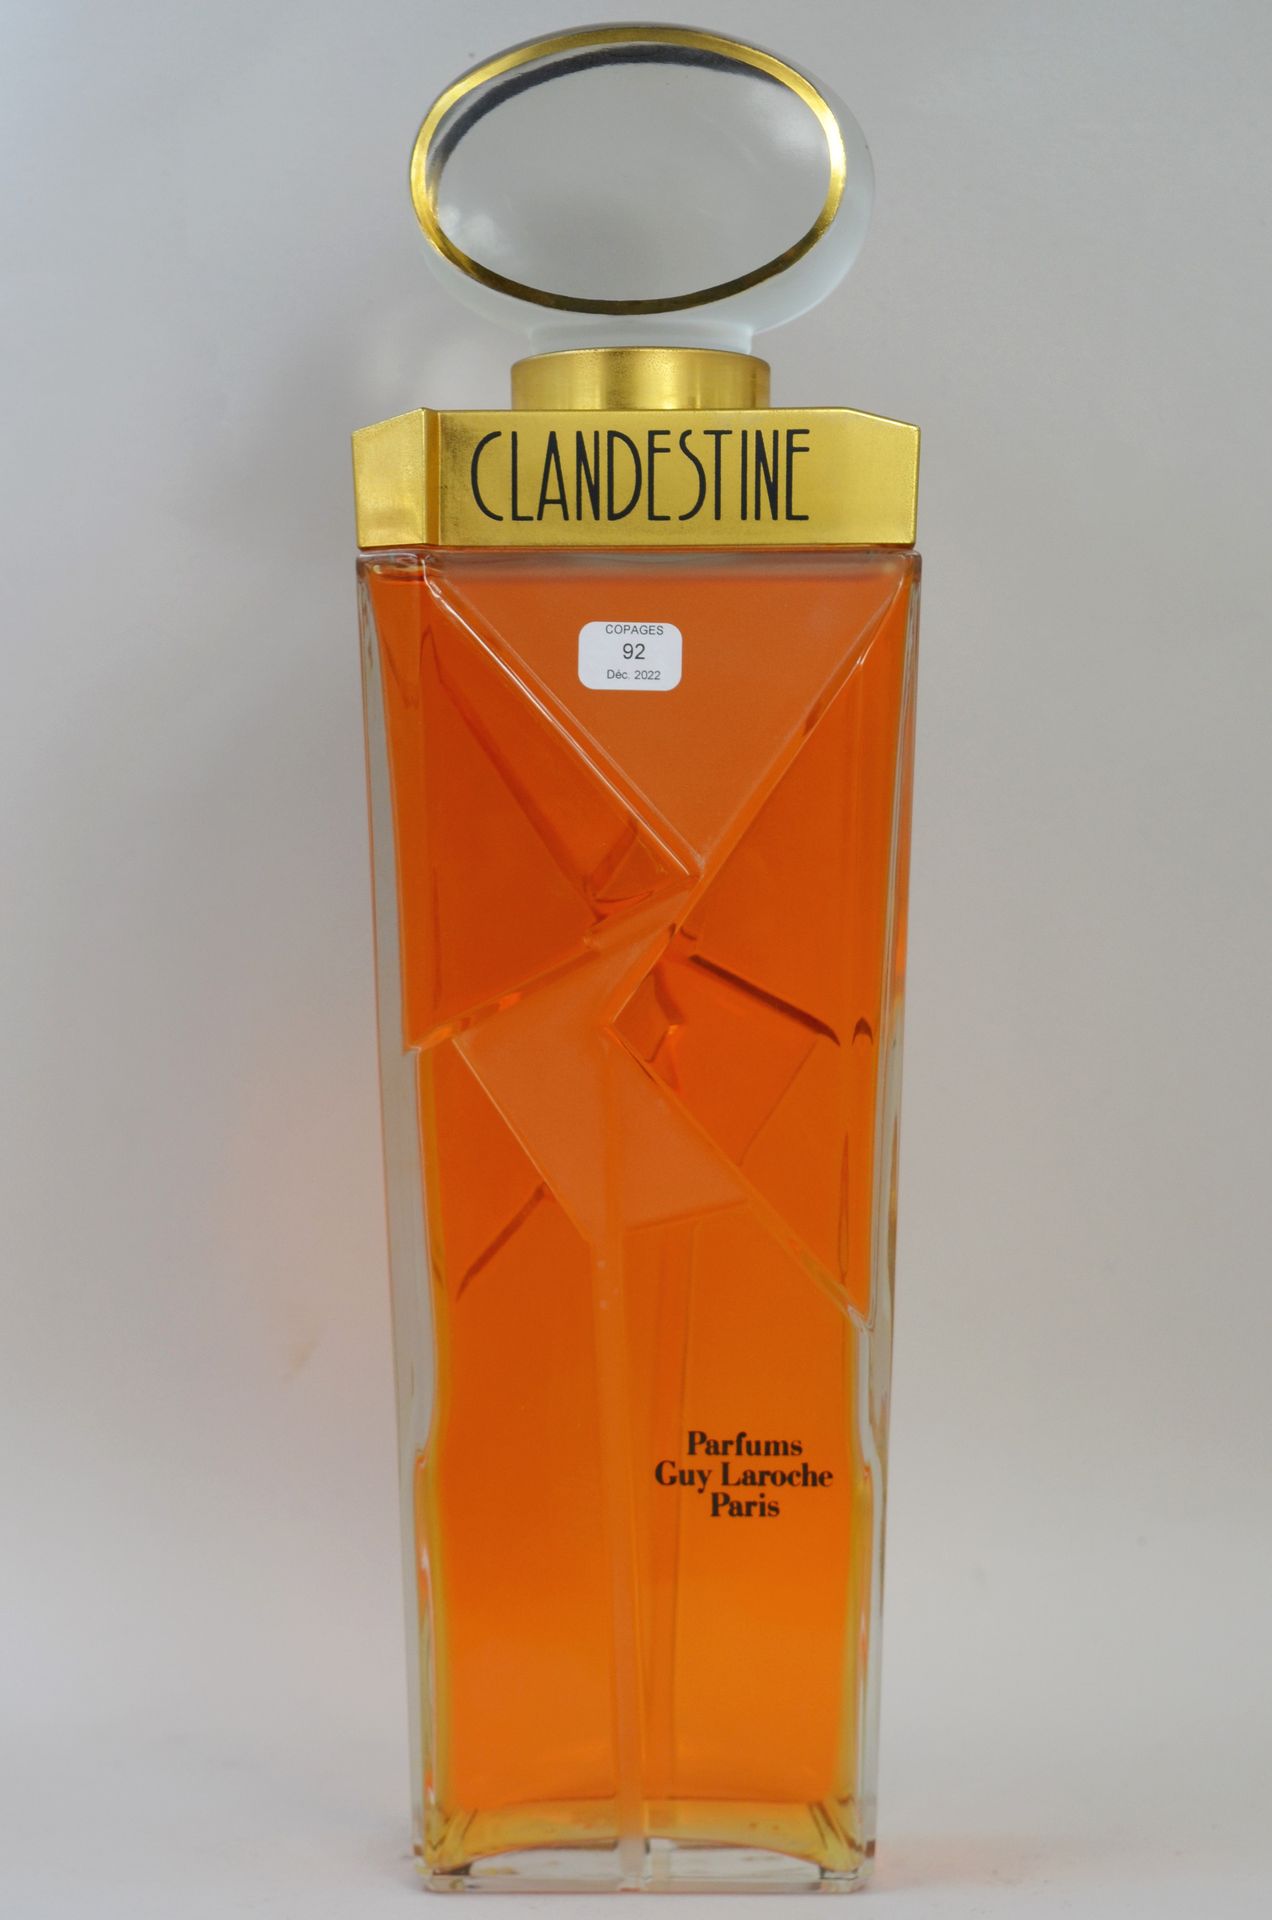 Null GUY LAROCHE « Clandestine »

Flacon factice de décoration en verre, titré s&hellip;